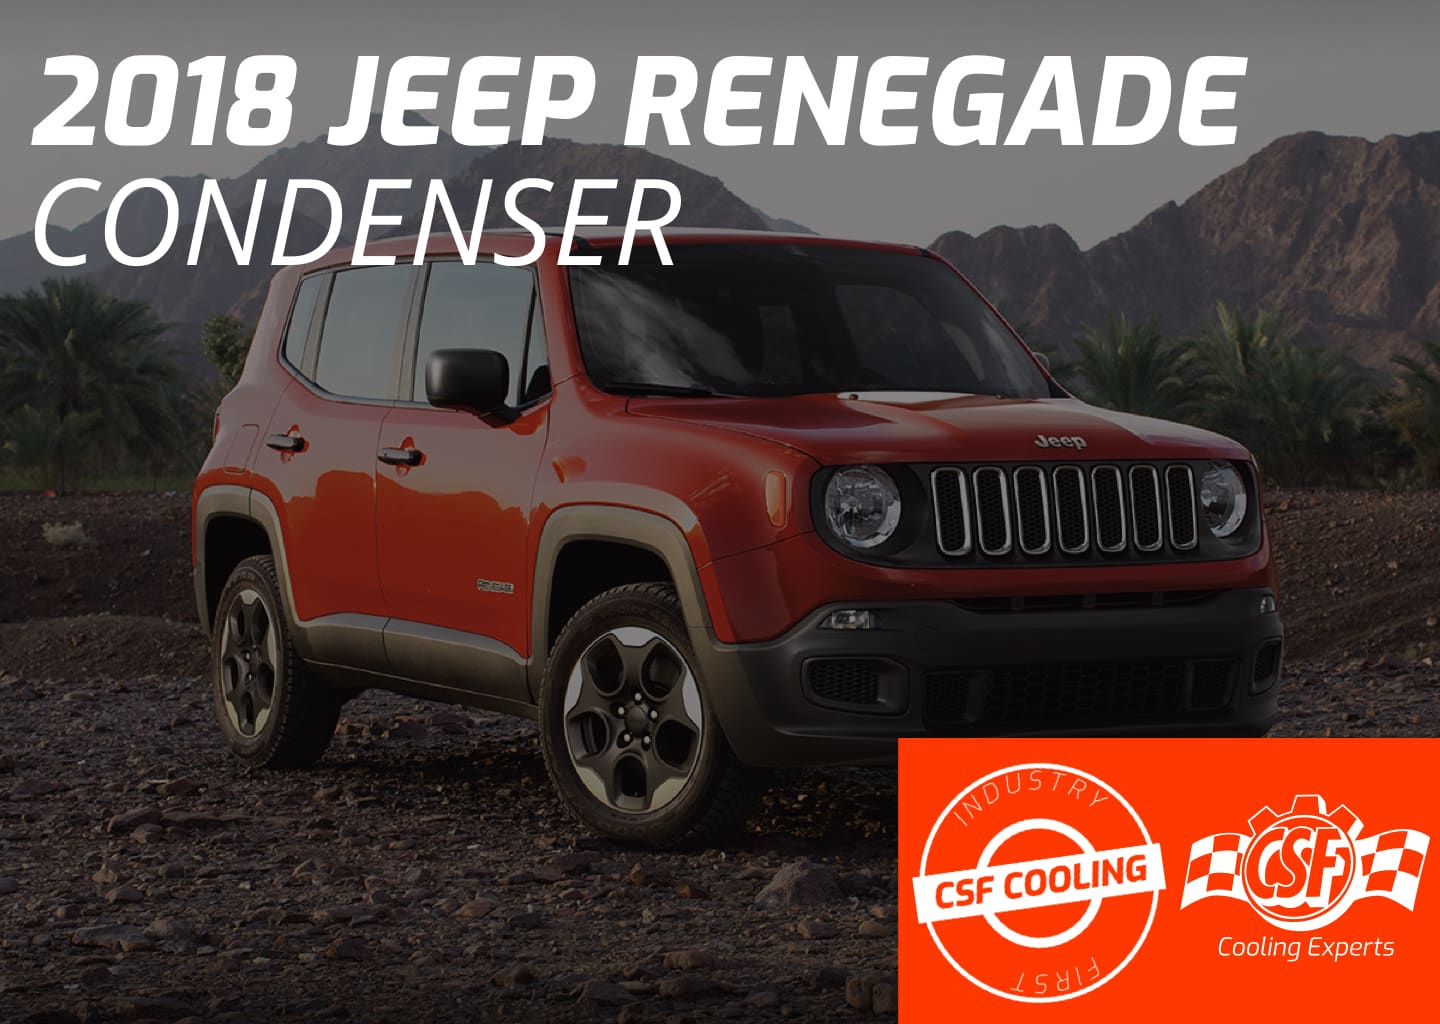 2018 Jeep Renegade Condenser